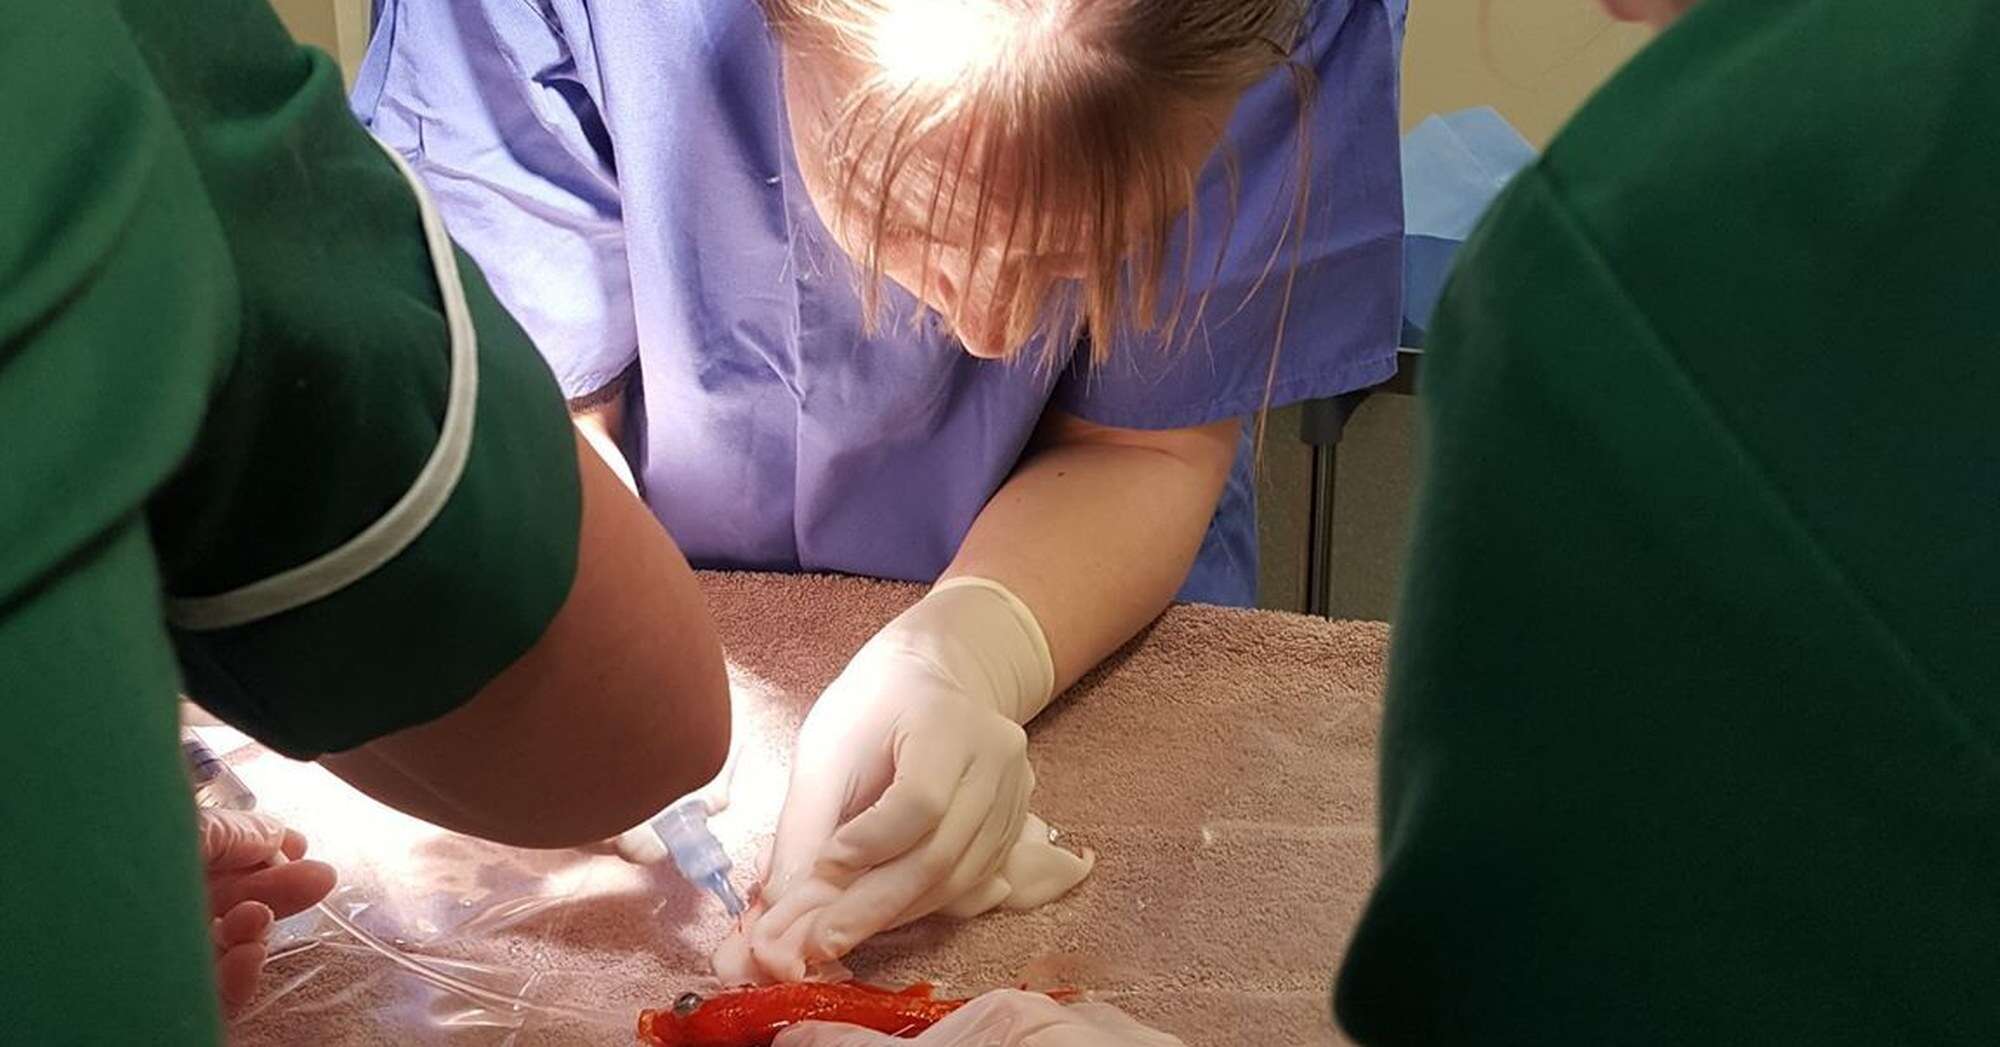 20 year old goldfish has surgery 